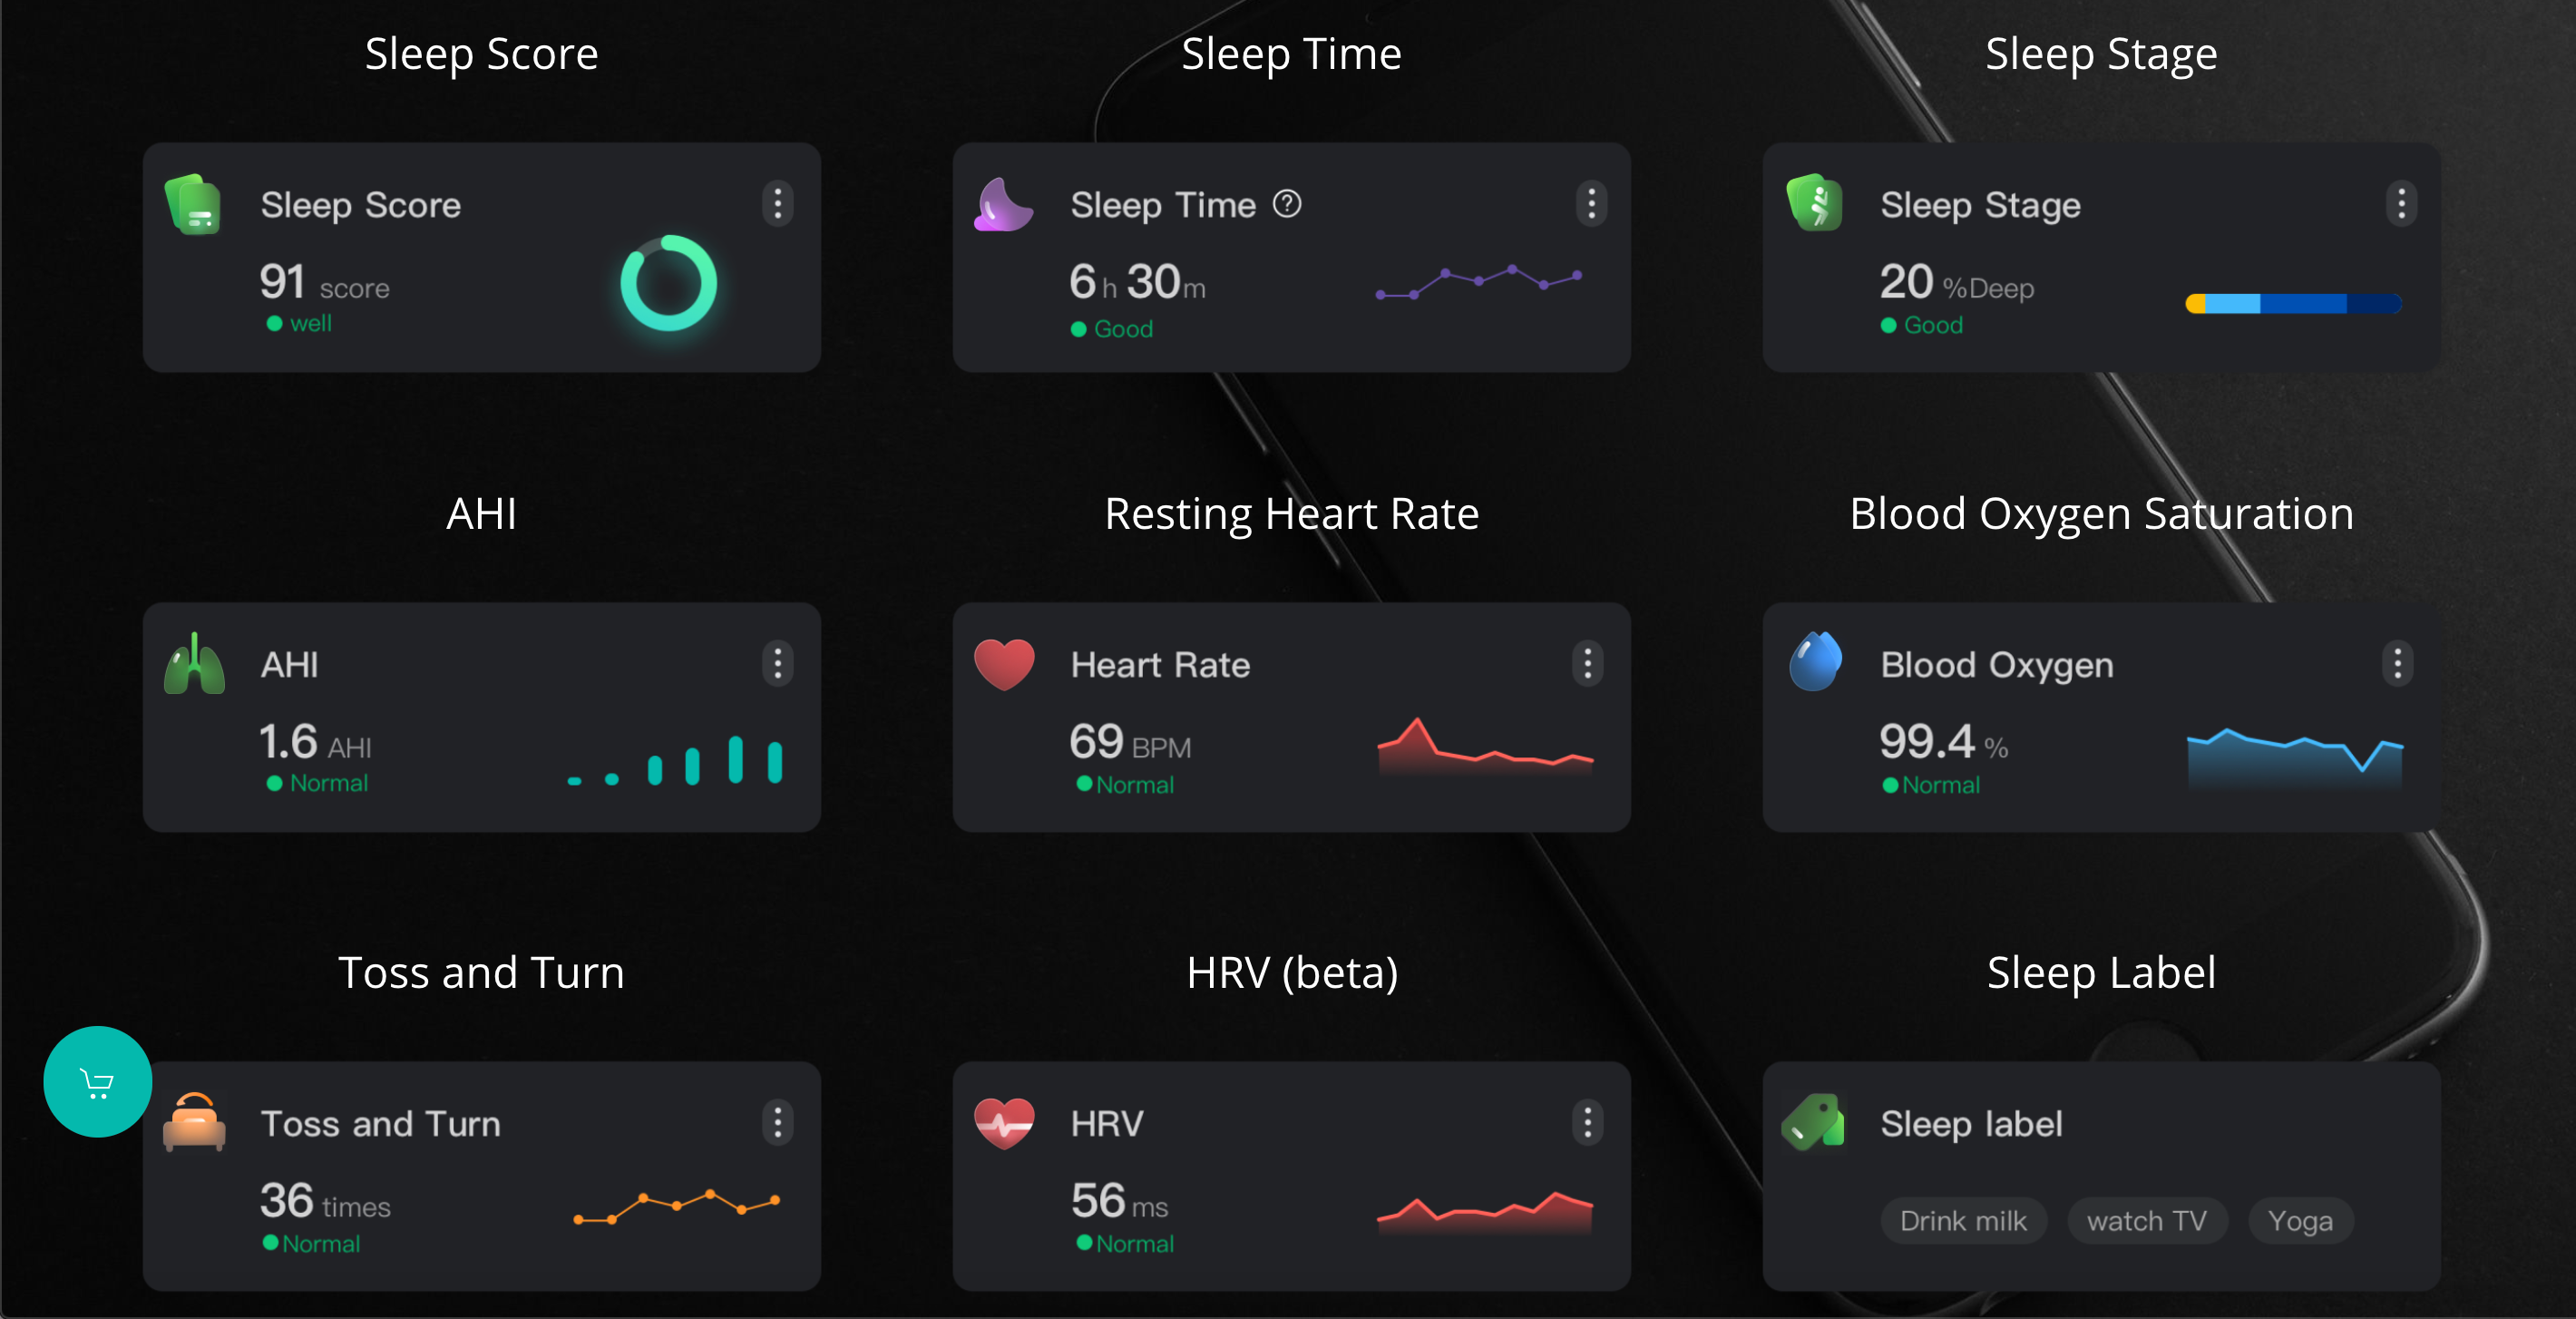 A screenshot displaying metrics for the Go to sleep smart ring